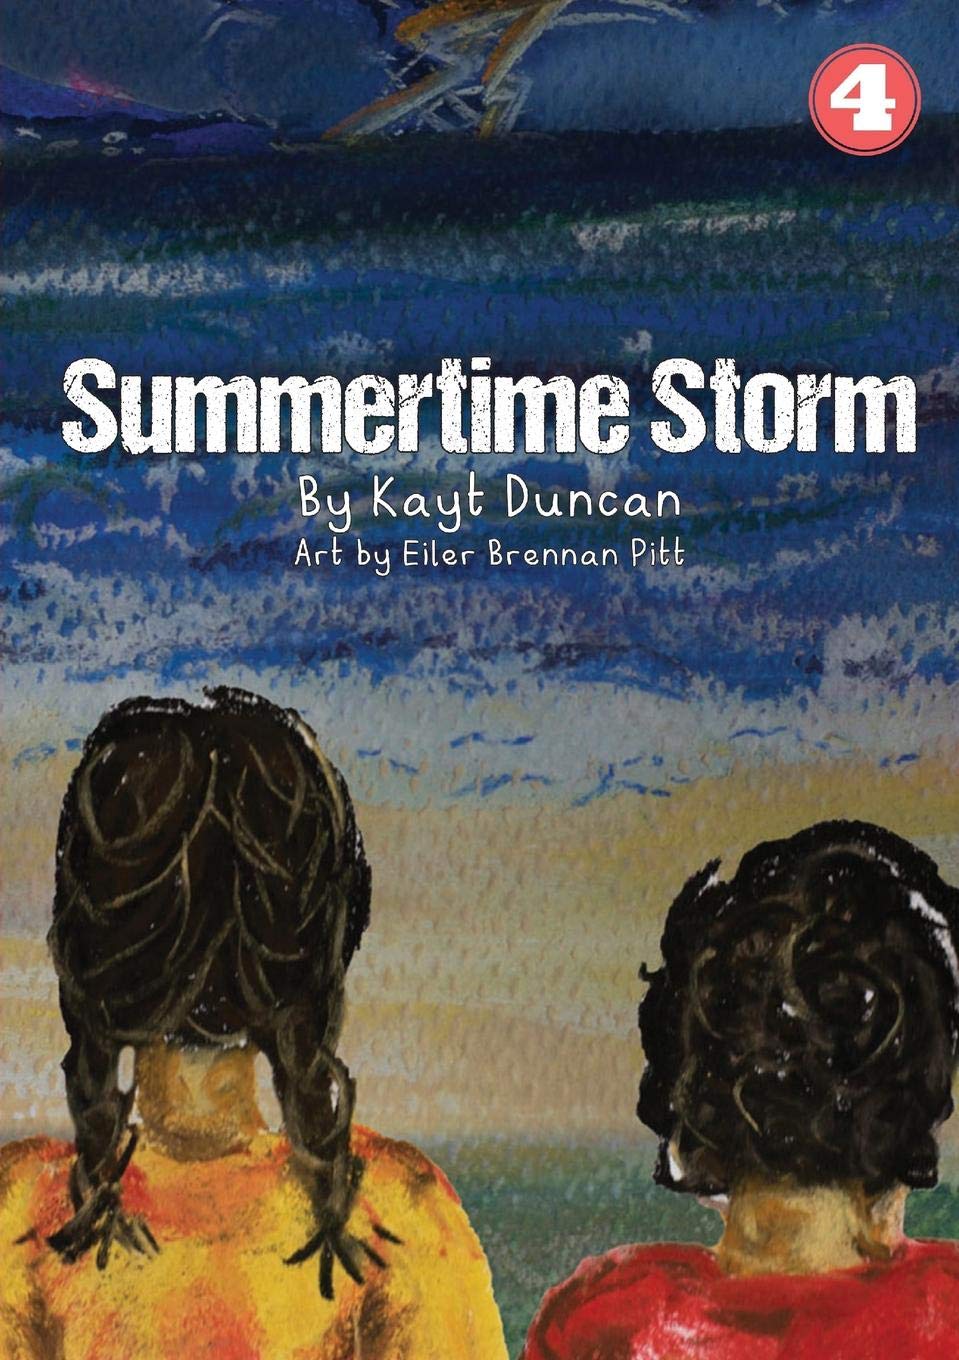 Summertime Storm by Kayt Duncan